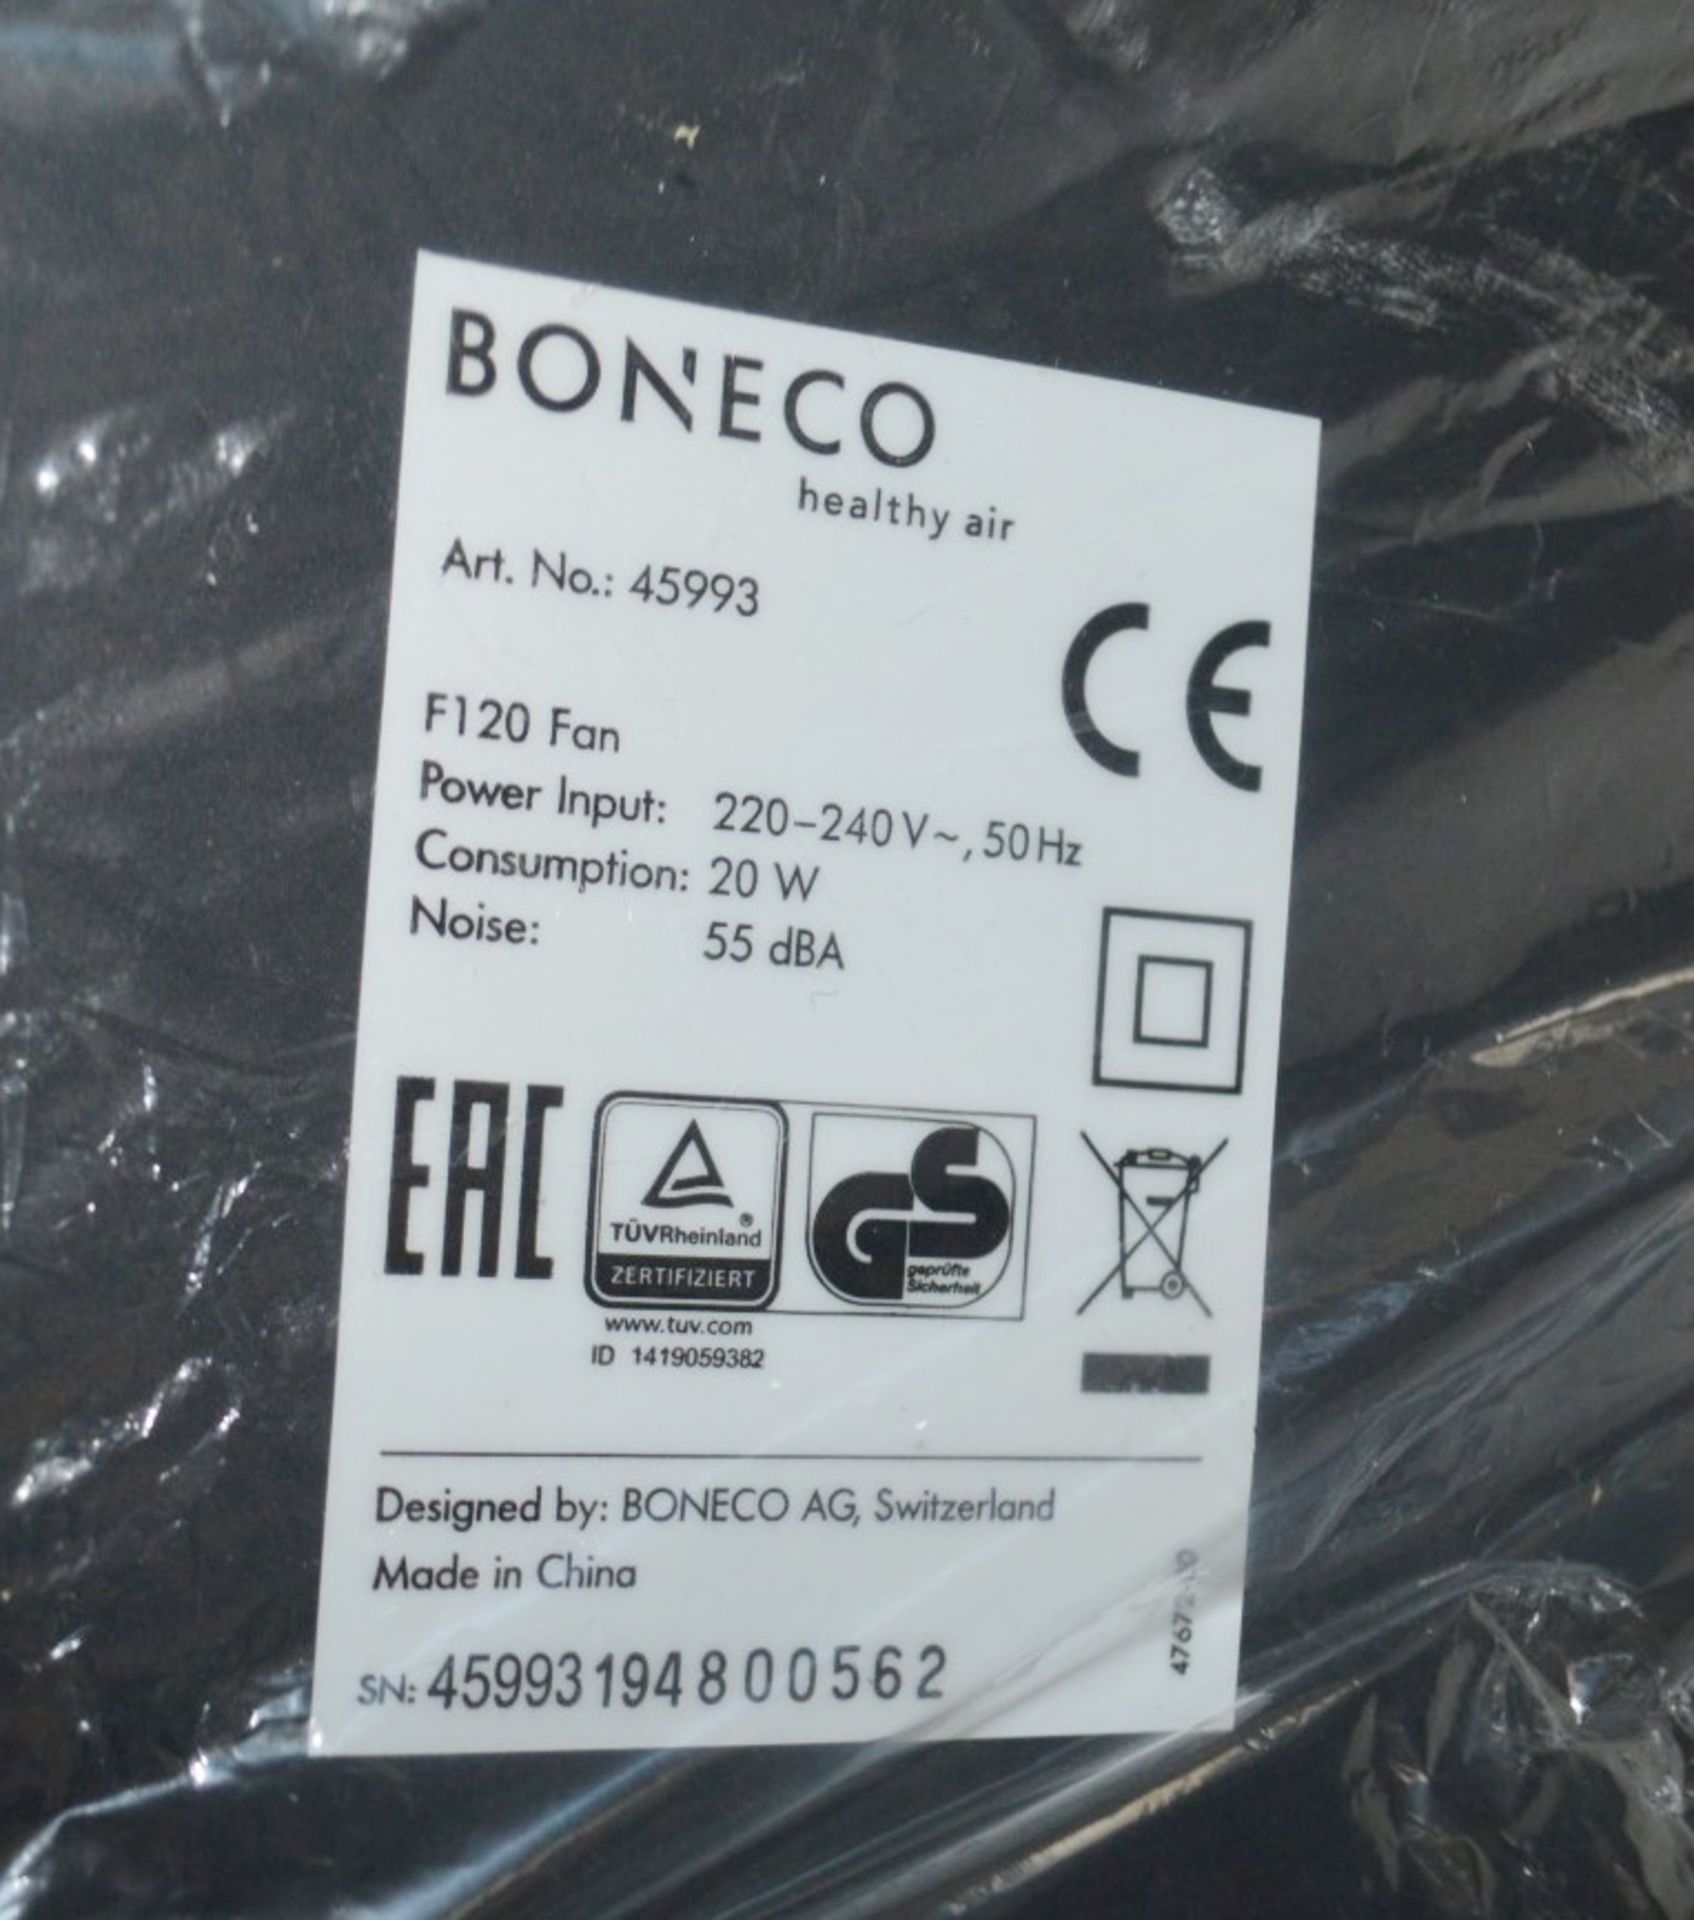 1 x BONECO F120 Air Shower Fan - Dimensions: H54 x W28 x D28cm - UK Plug - Ref: HHW132/NOV21/GITC2 - - Image 6 of 6